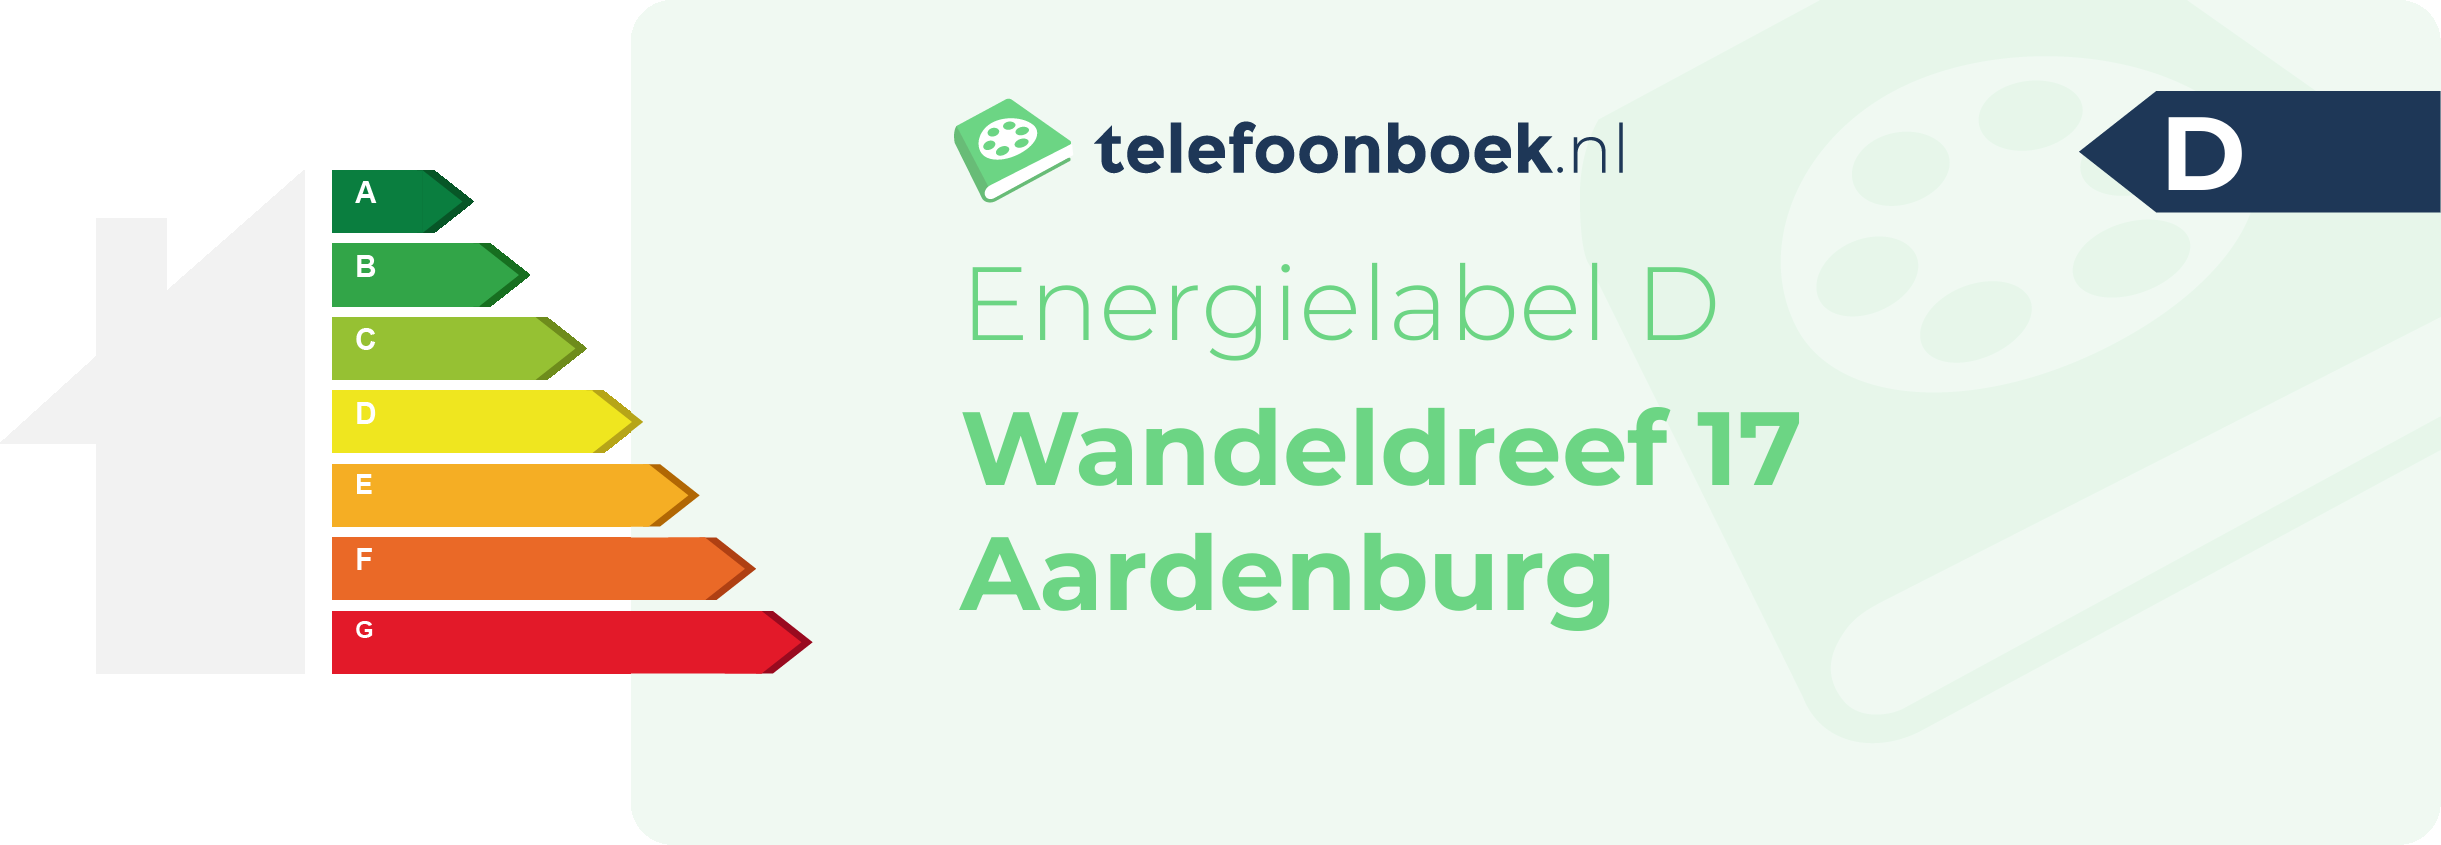 Energielabel Wandeldreef 17 Aardenburg